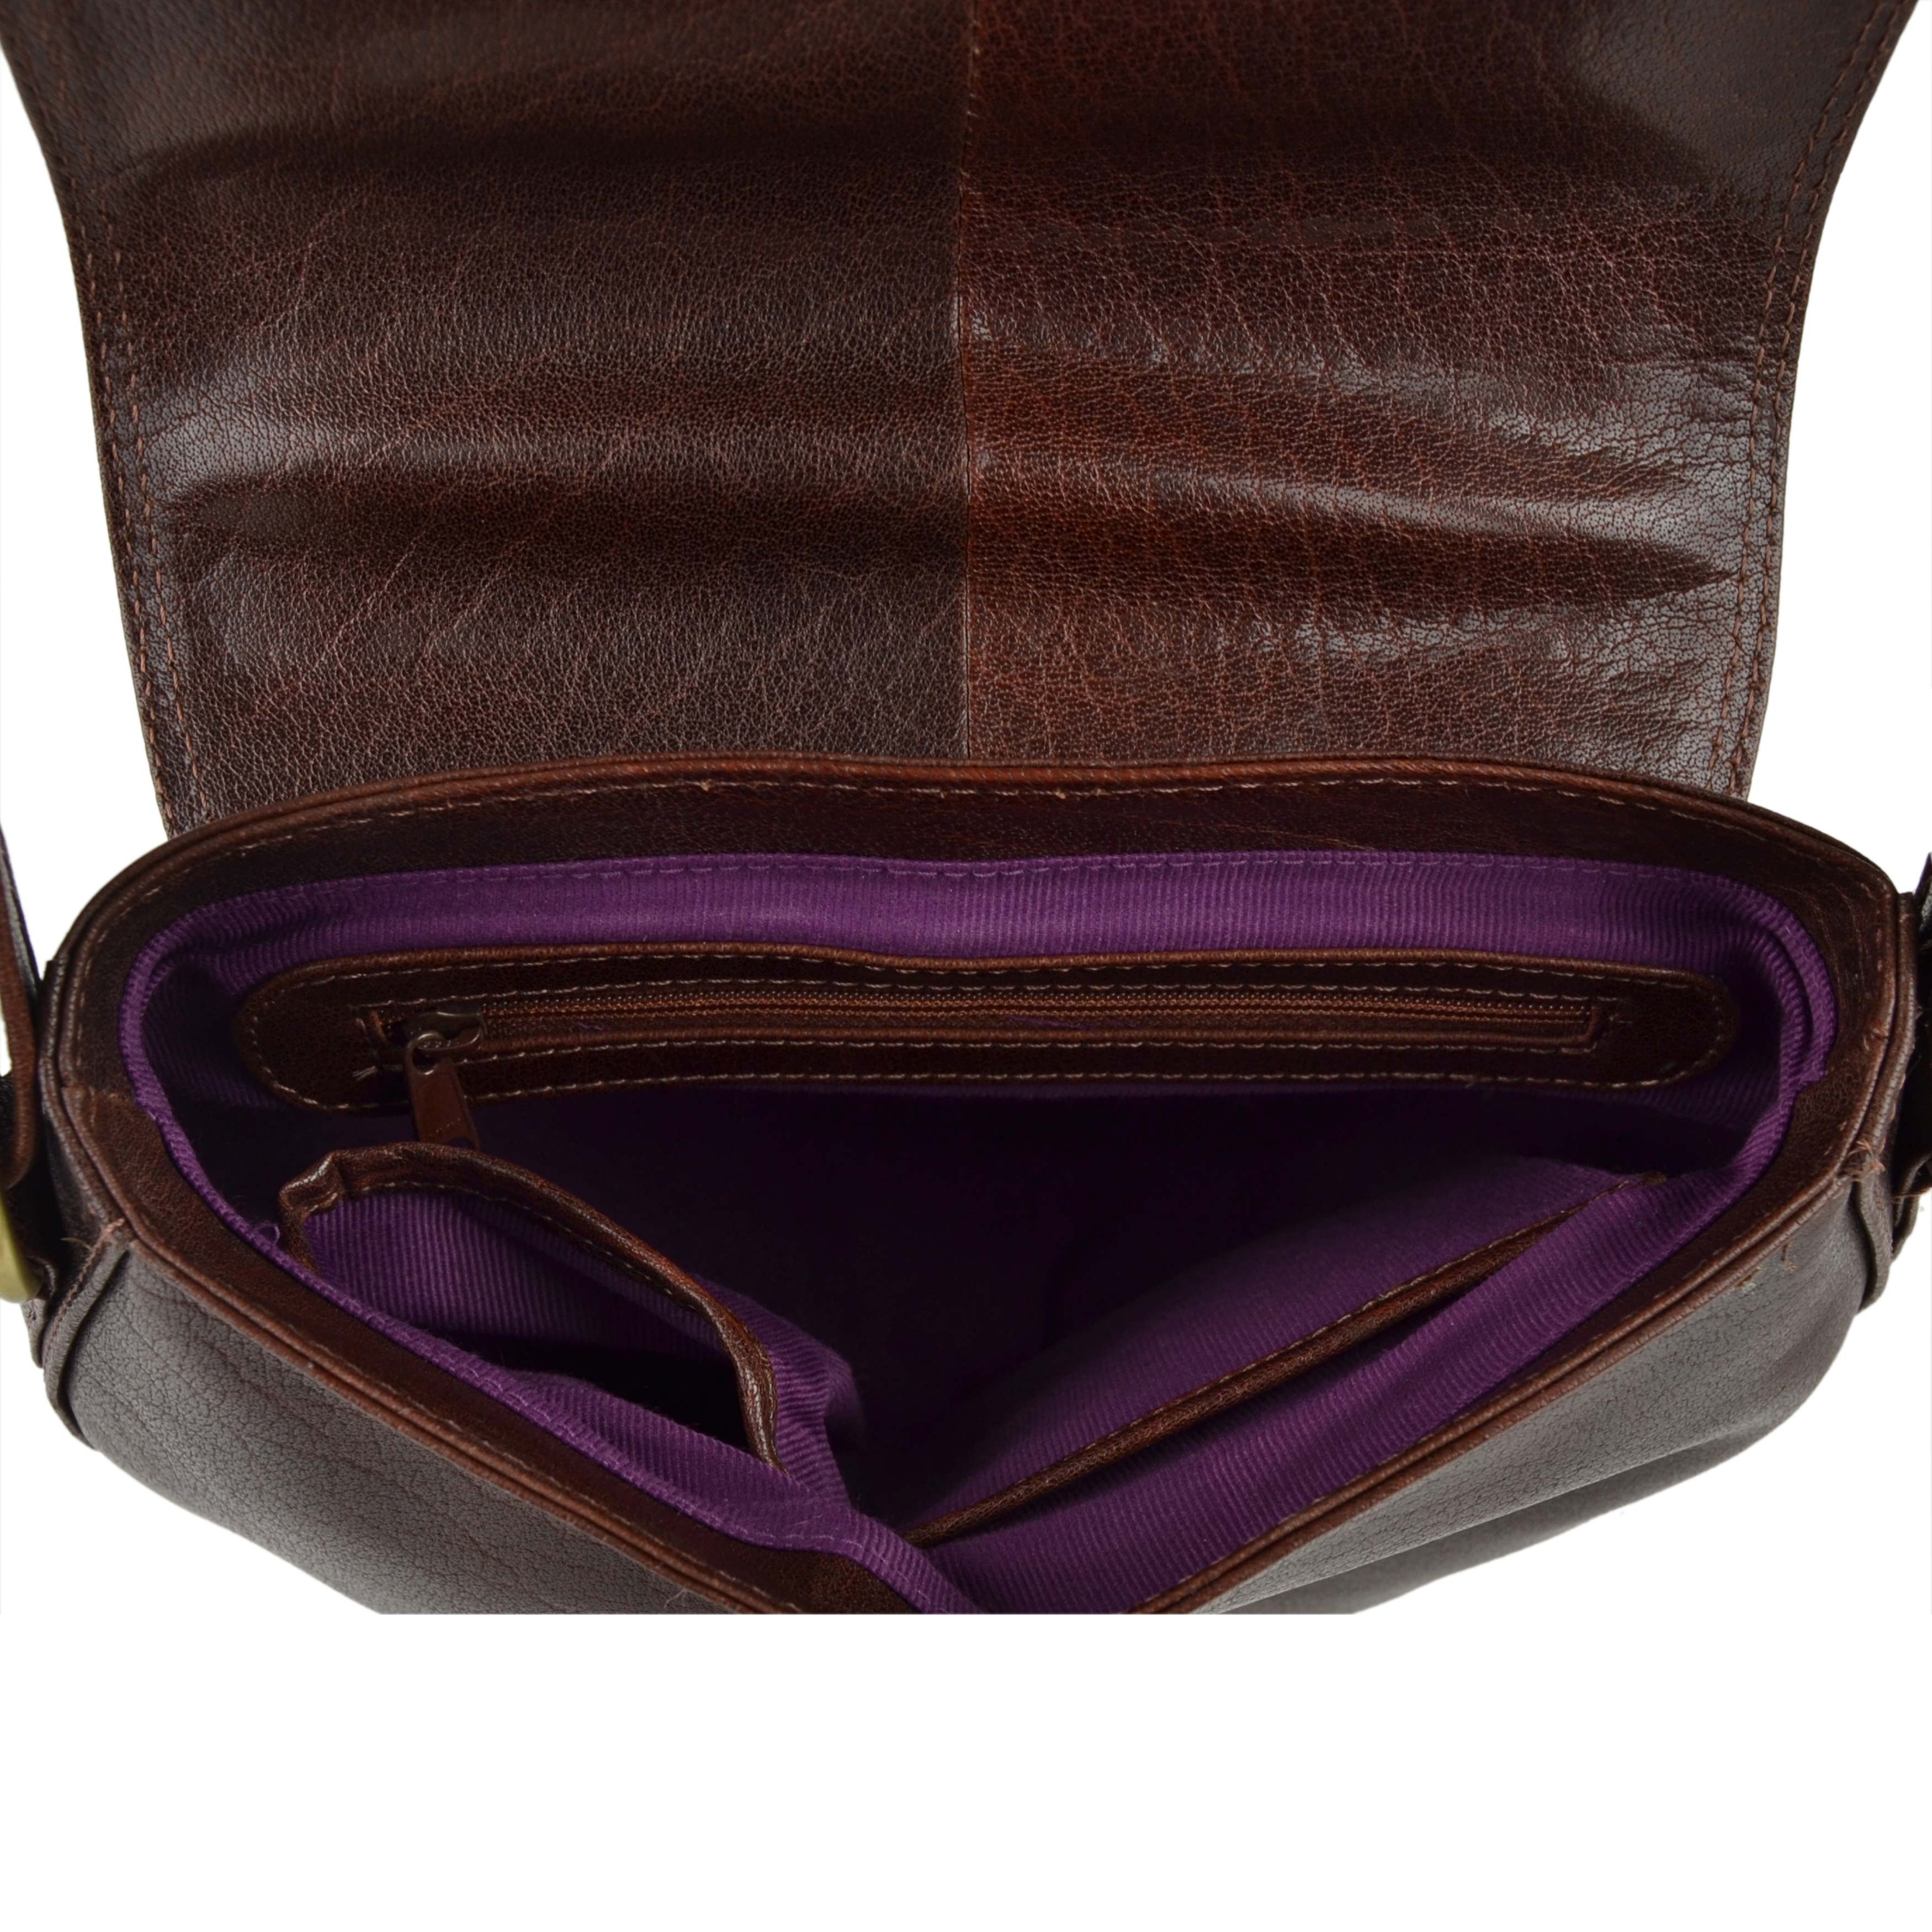 Ladies Small Leather Cross Body Shoulder BAG Kenneth Brownne Handbag Classic